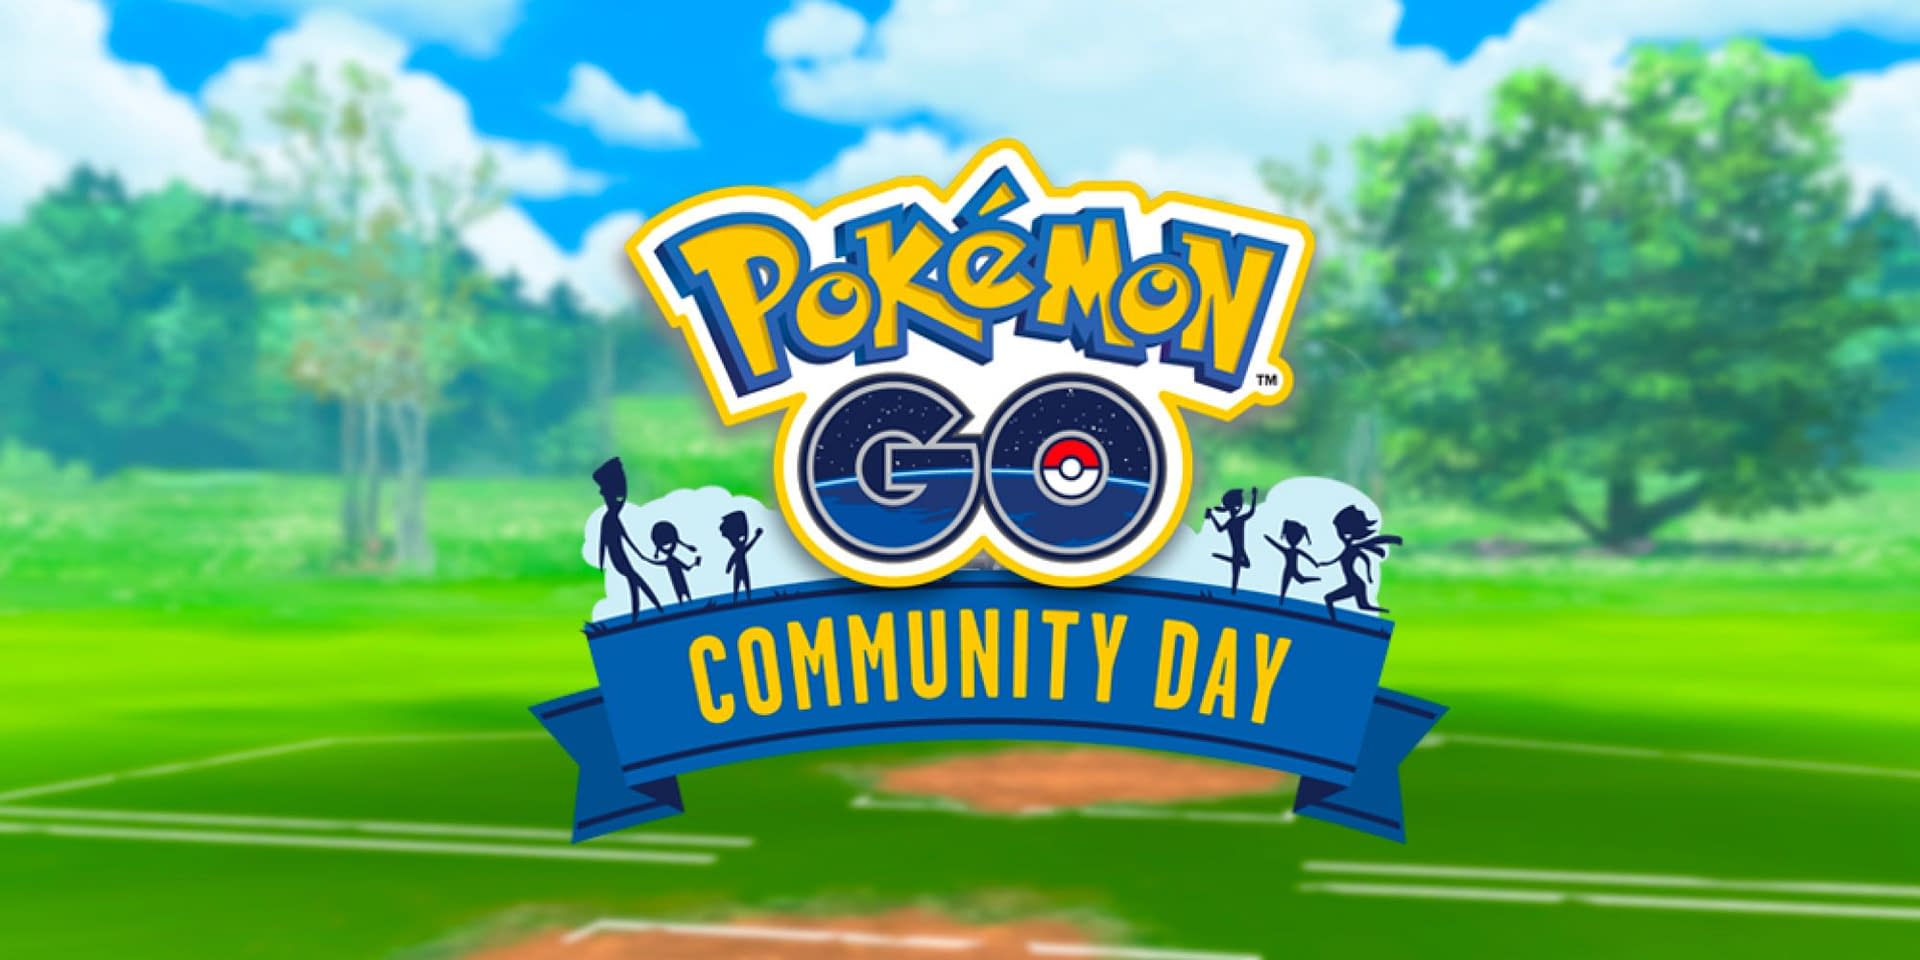 Pokémon GO Announced December 2020 Community Day… With A Catch